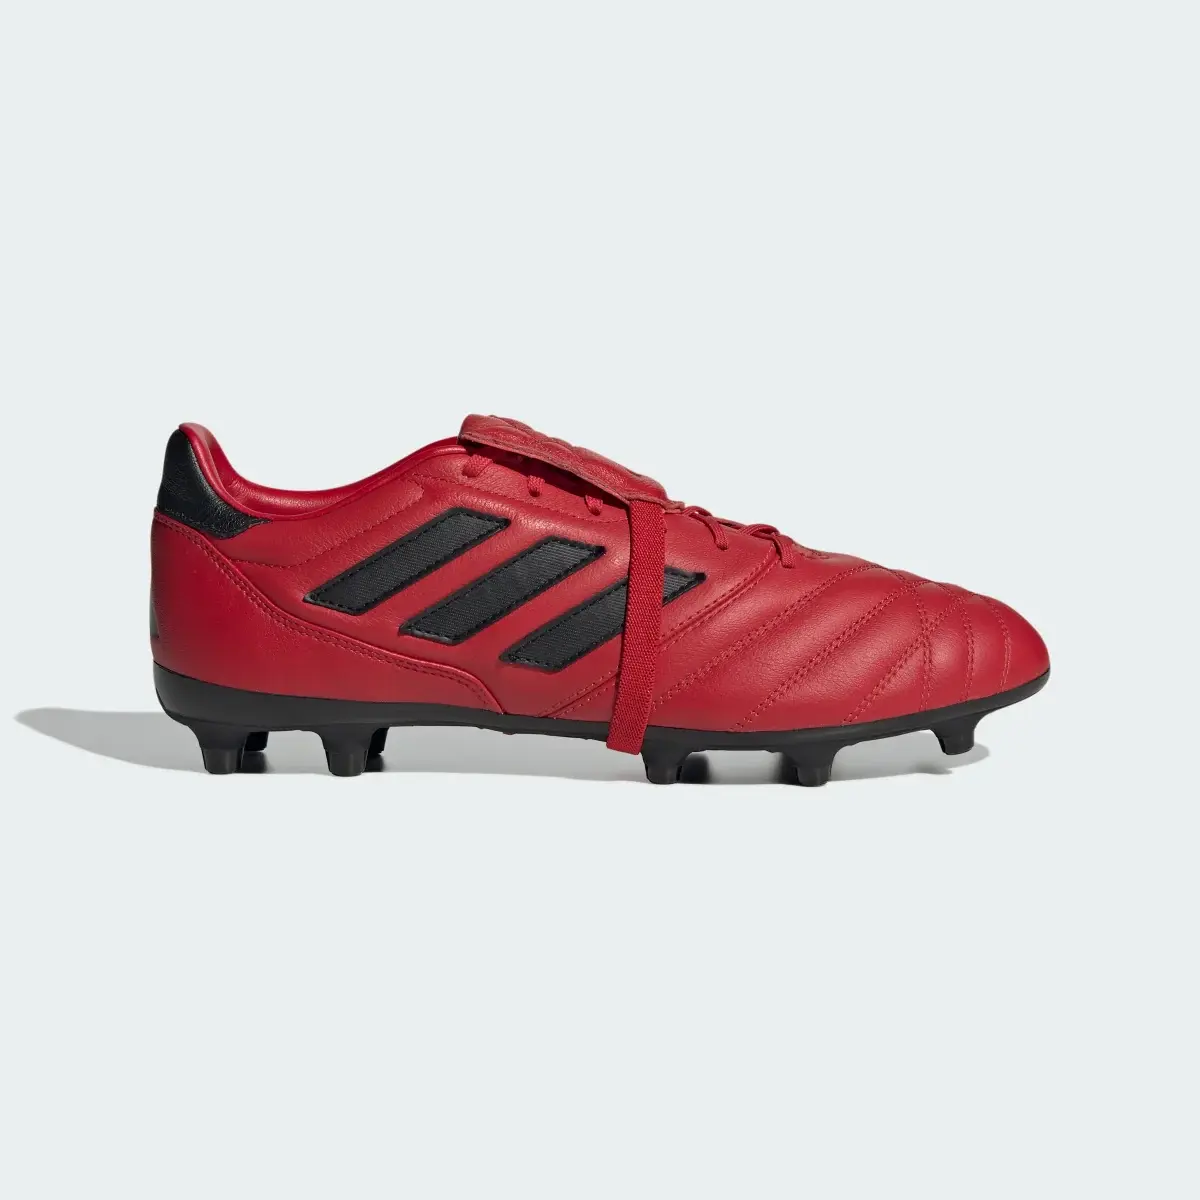 Adidas Copa Gloro Firm Ground Boots. 2